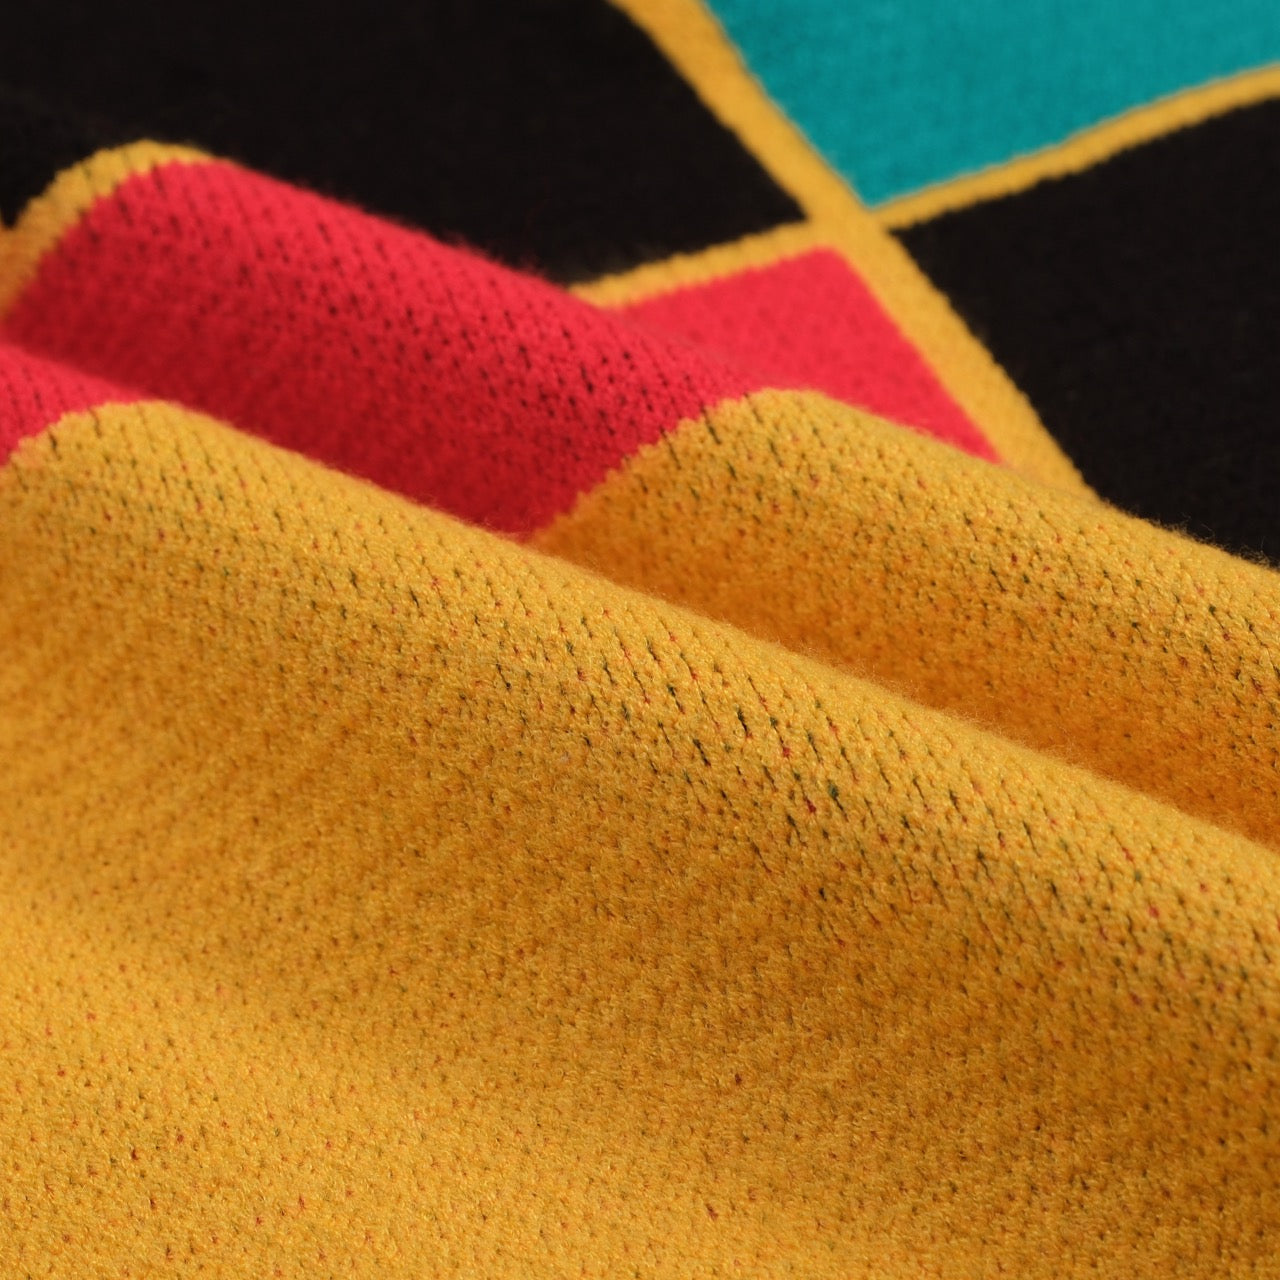 Men's multi-colored striped knit polo shirt